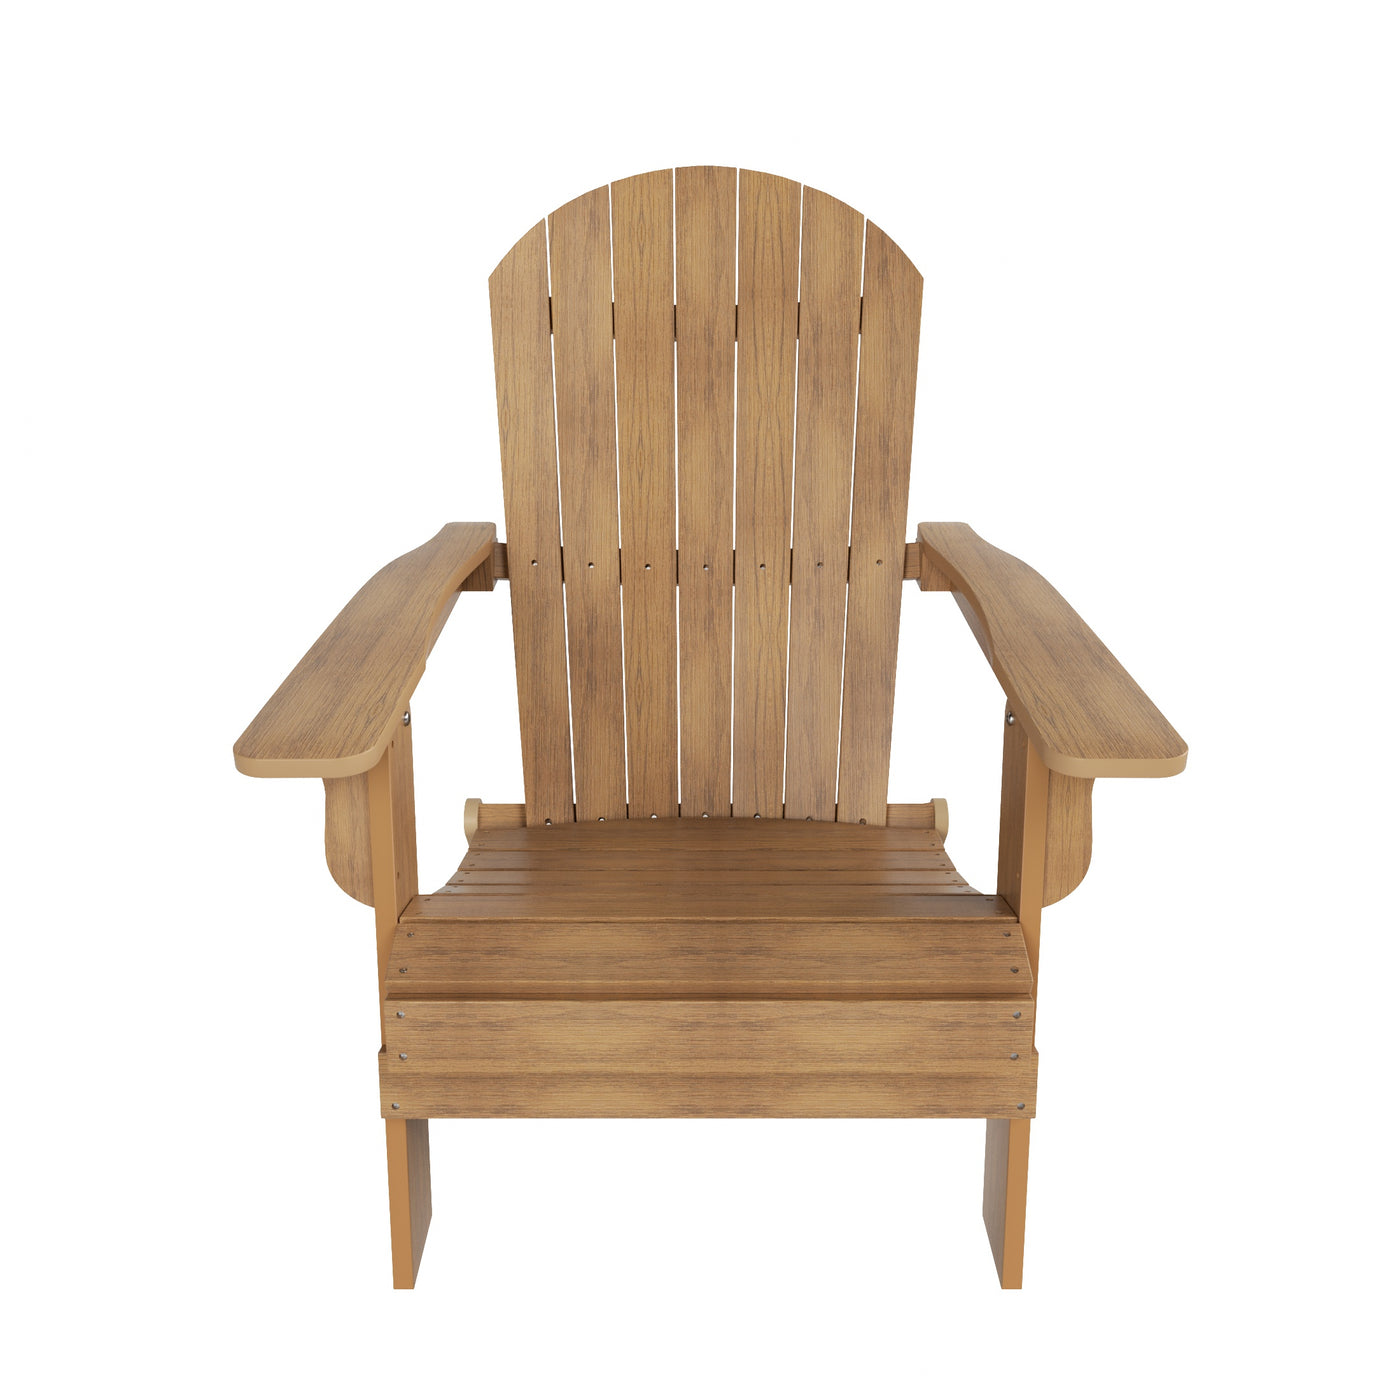 Tuscany HIPS Outdoor Folding Adirondack Chair (Set of 4)